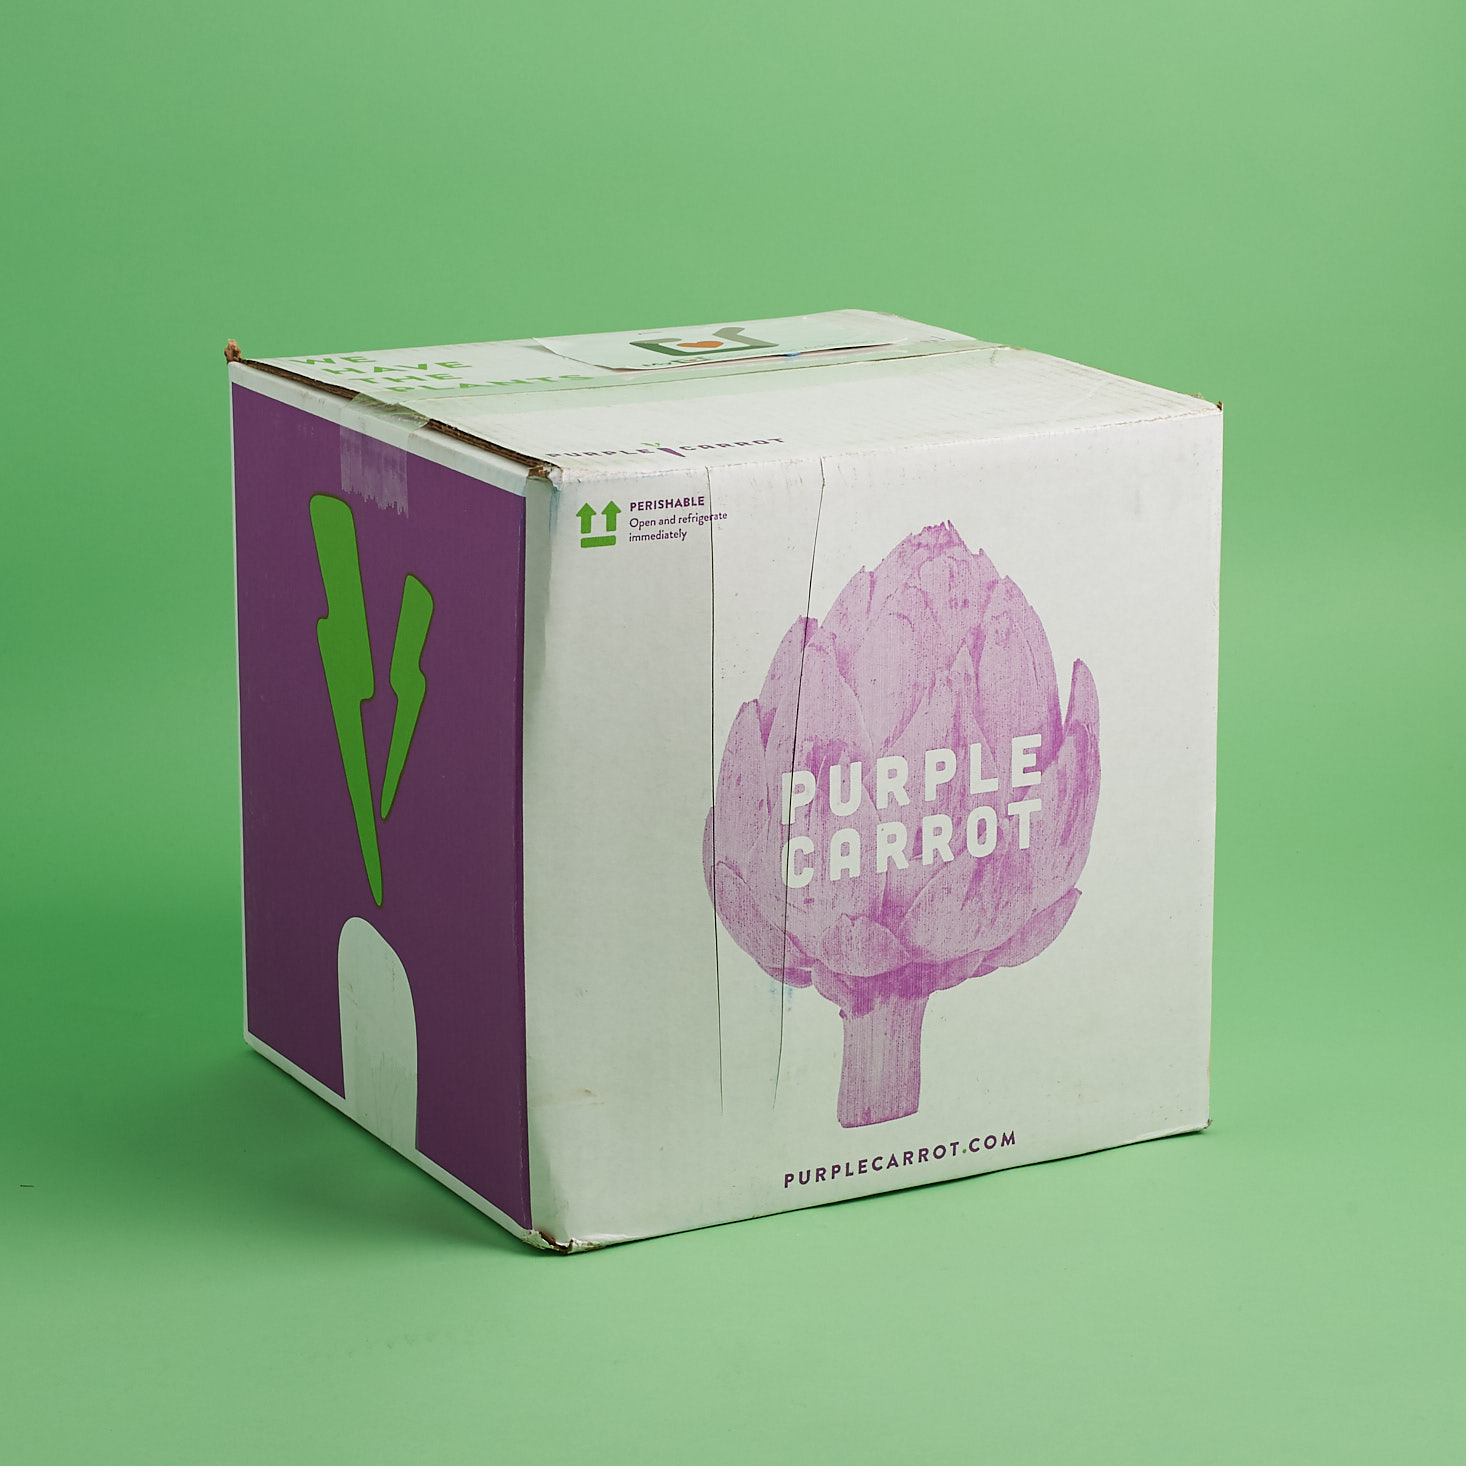 Purple Carrot Vegan Meal Kit Subscription Box Review + Coupon – April 2018